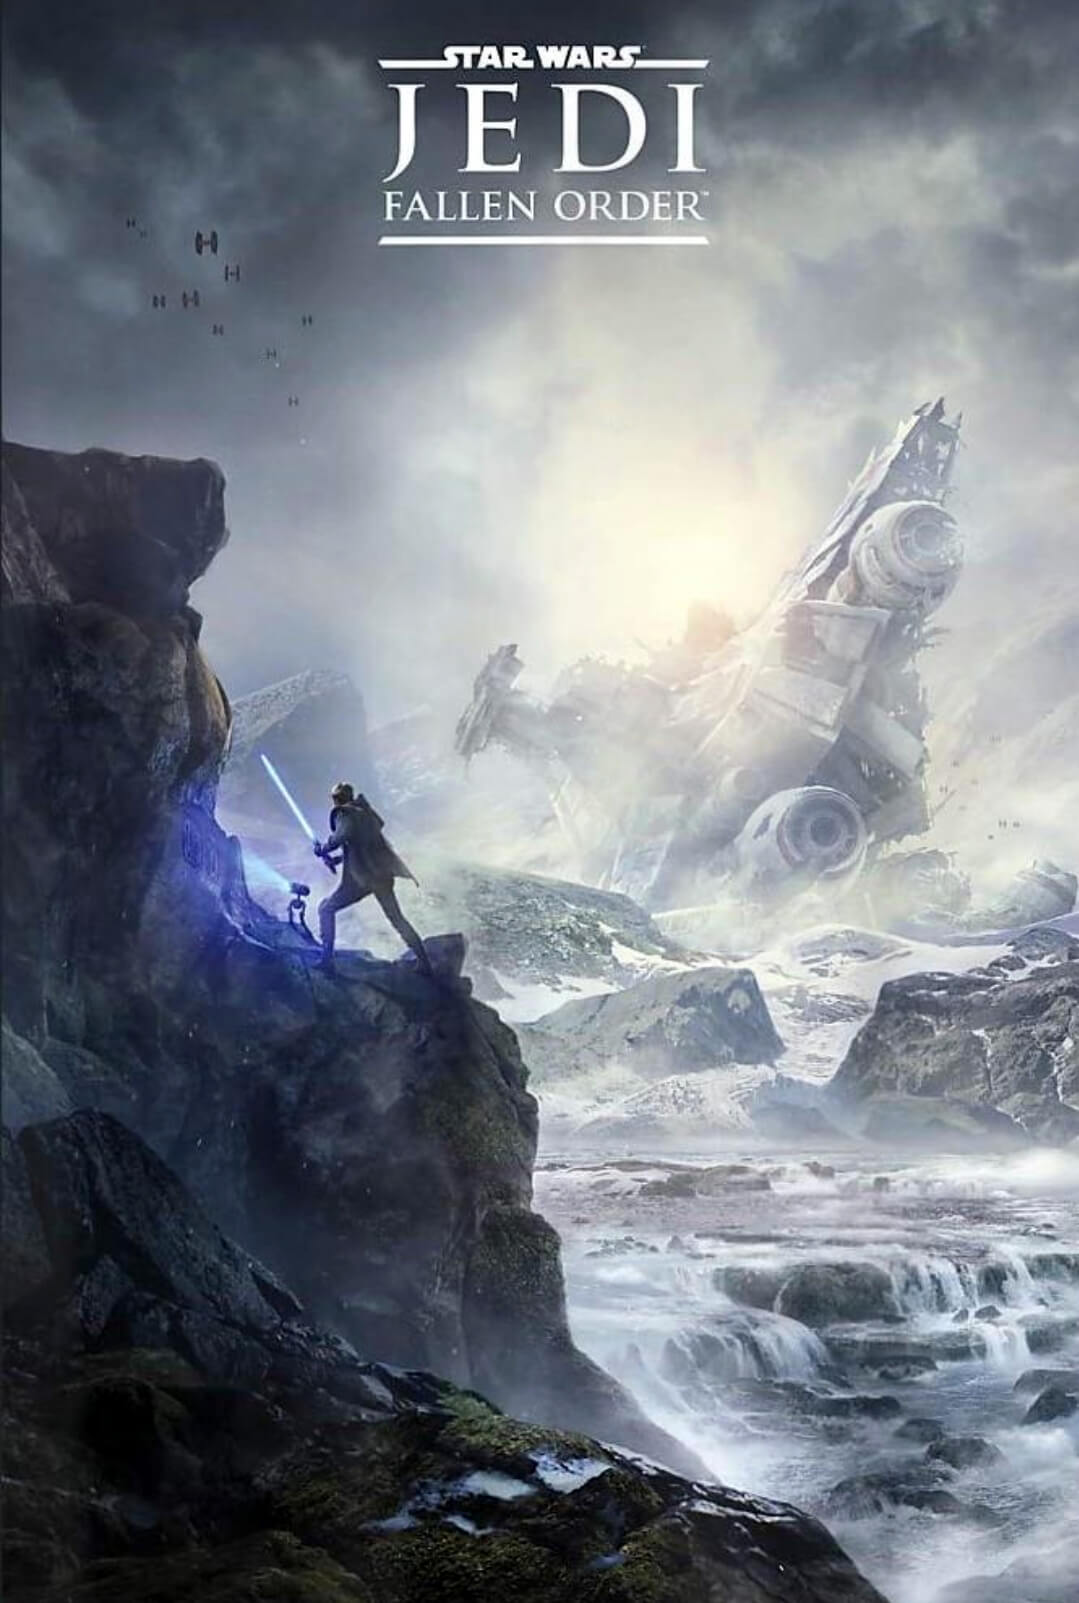 Утечка: еще один новый постер Star Wars Jedi: Fallen Order (фото)